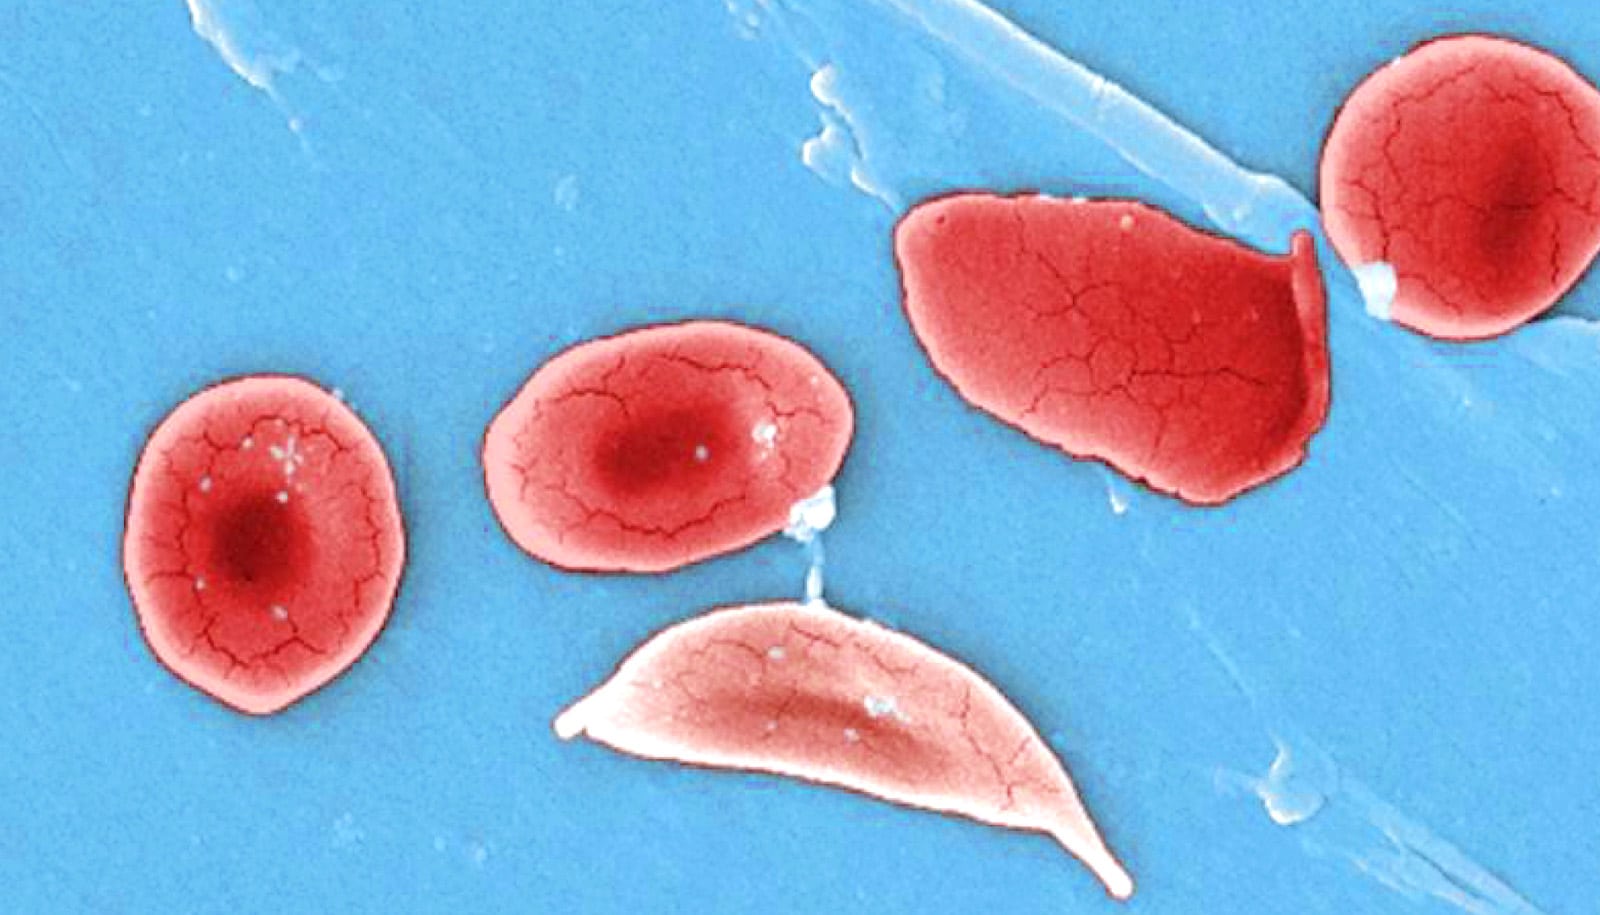 Could CRISPR treat sickle cell disease? - Futurity